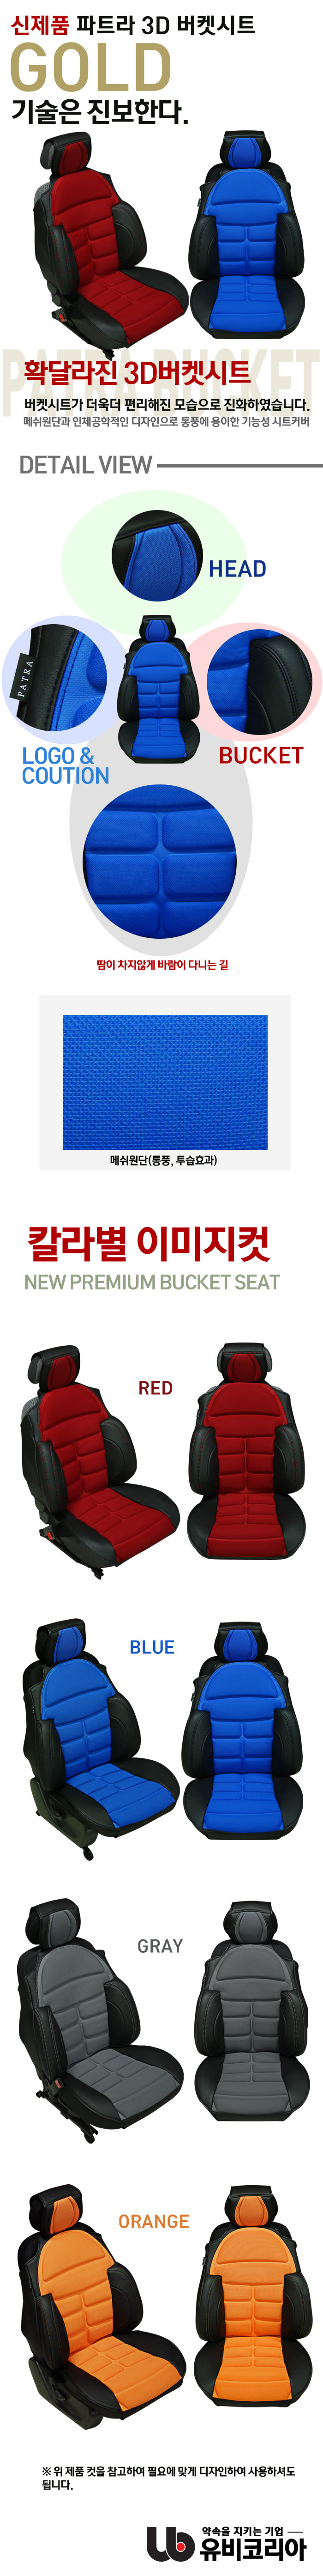 gold_3Dbucket_seat.jpg